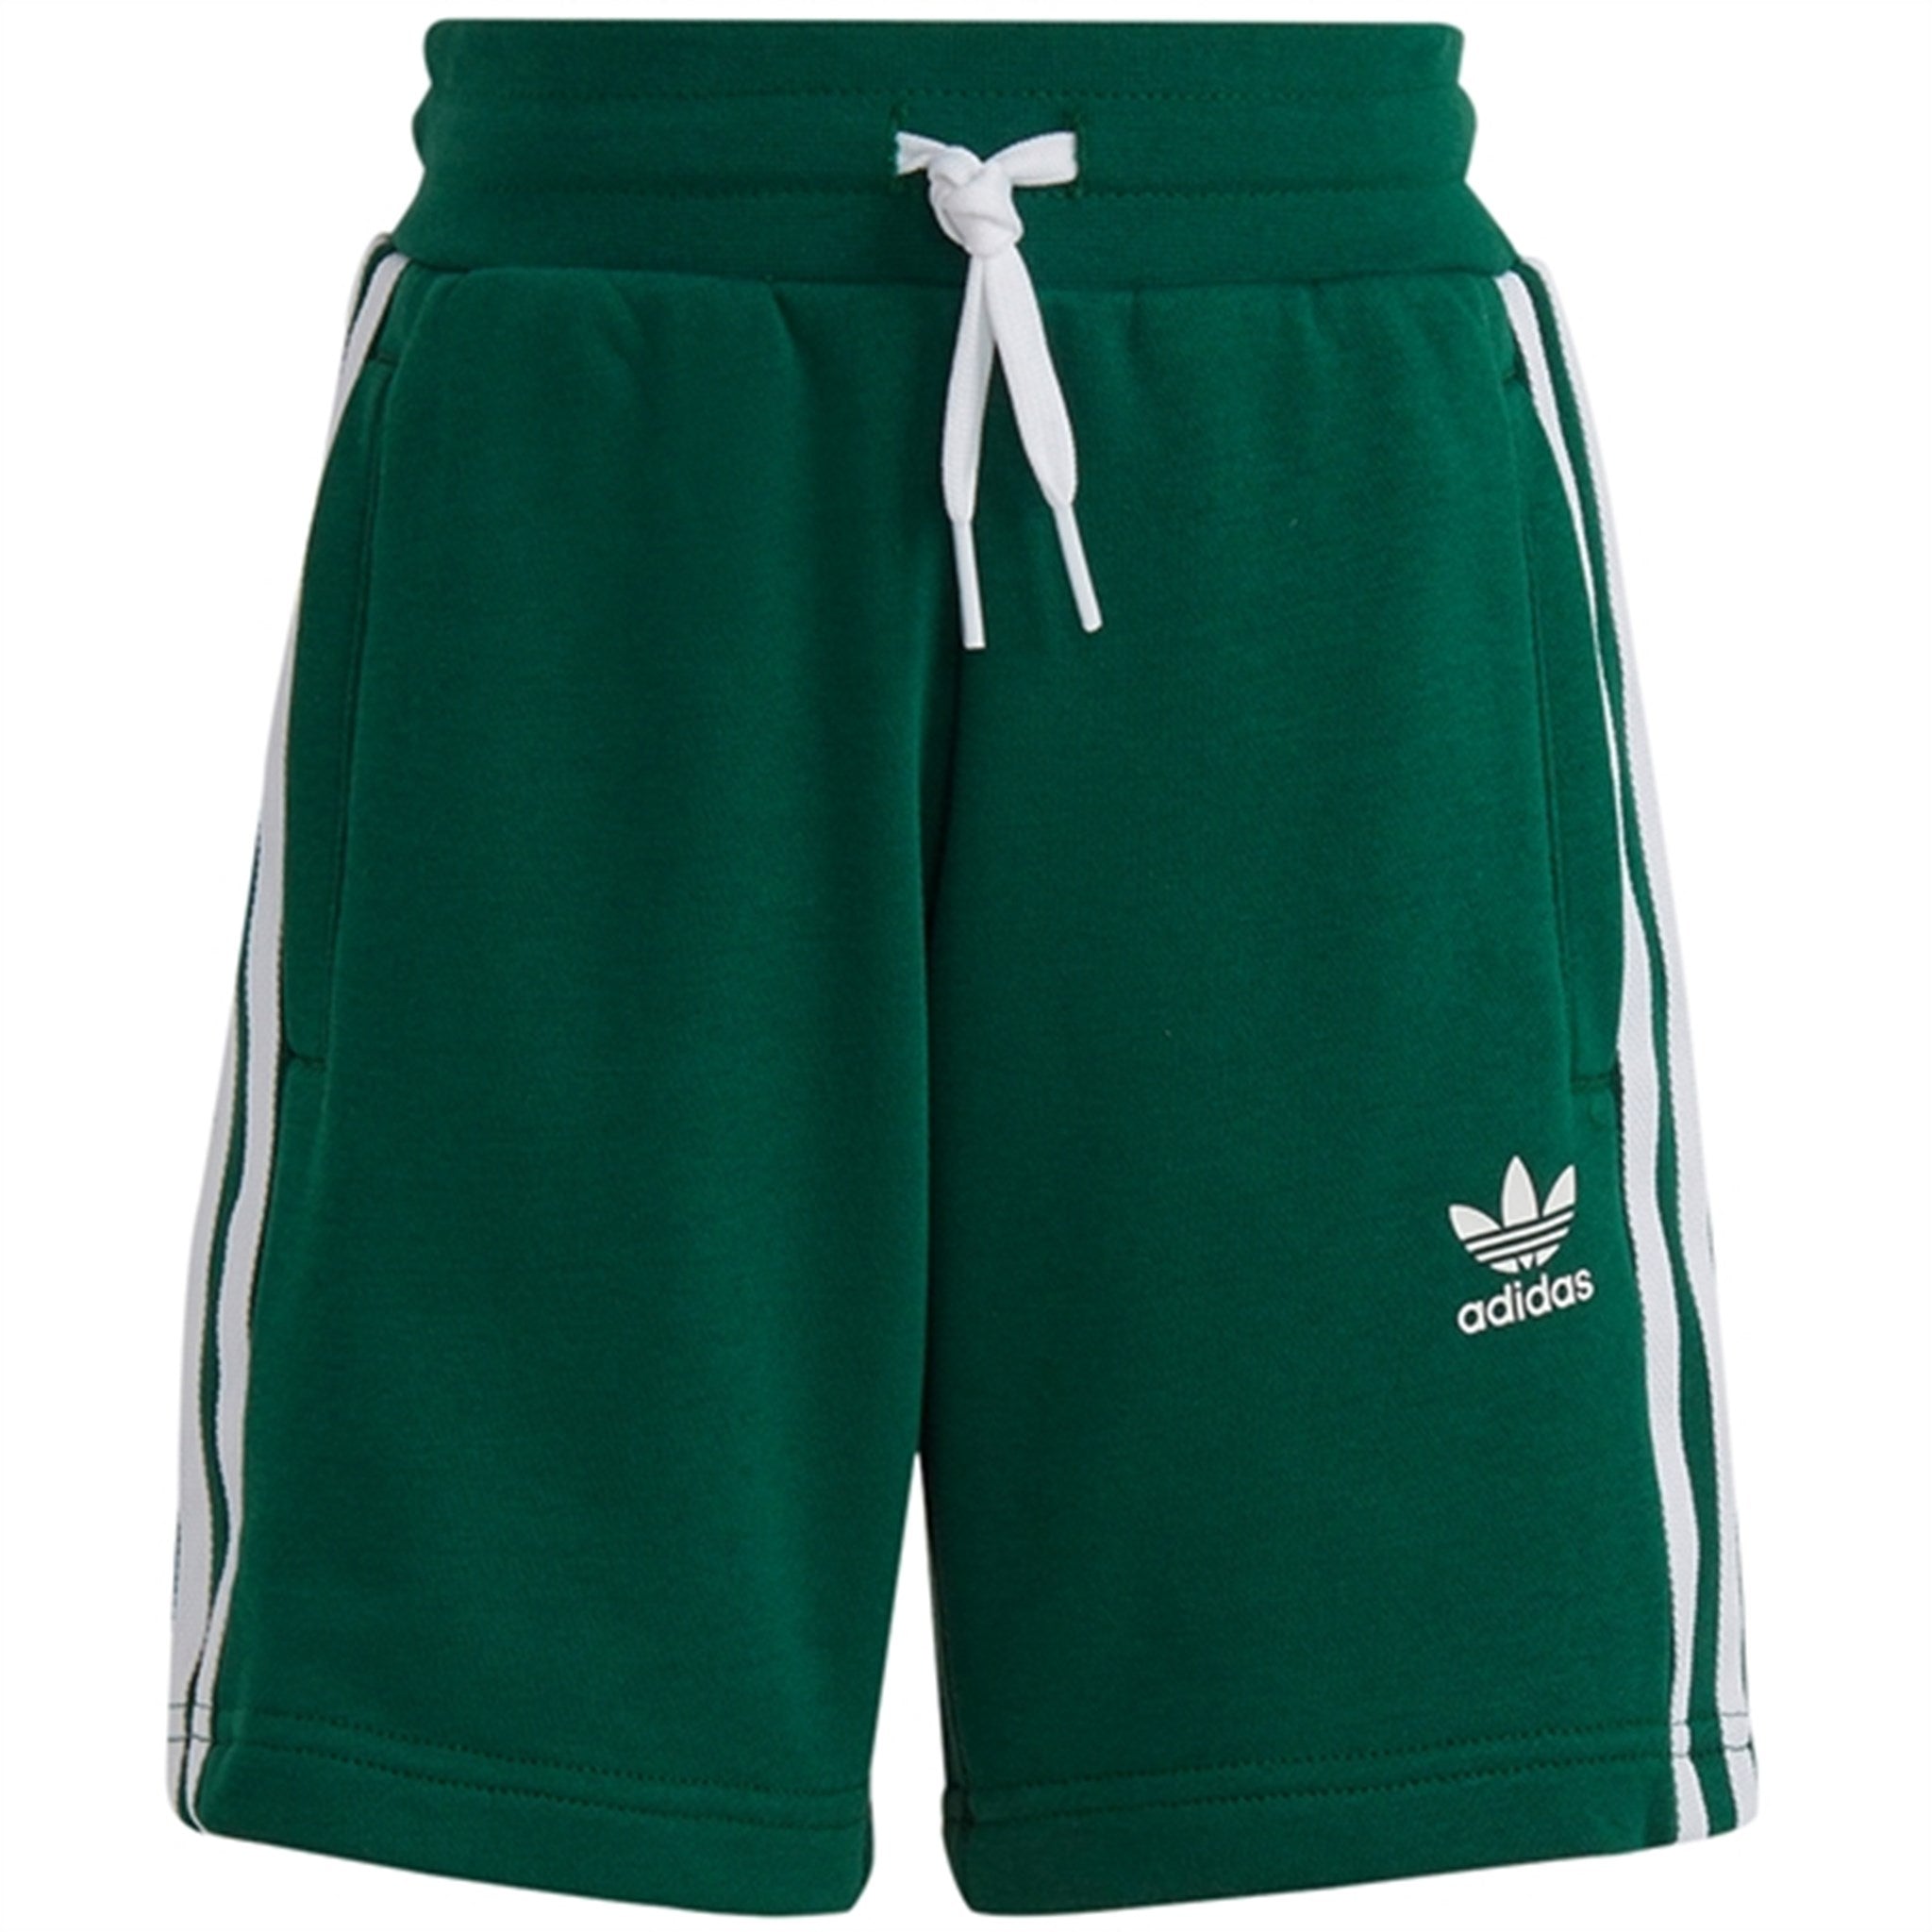 adidas Originals Dark Green Shorts Tee Set 8